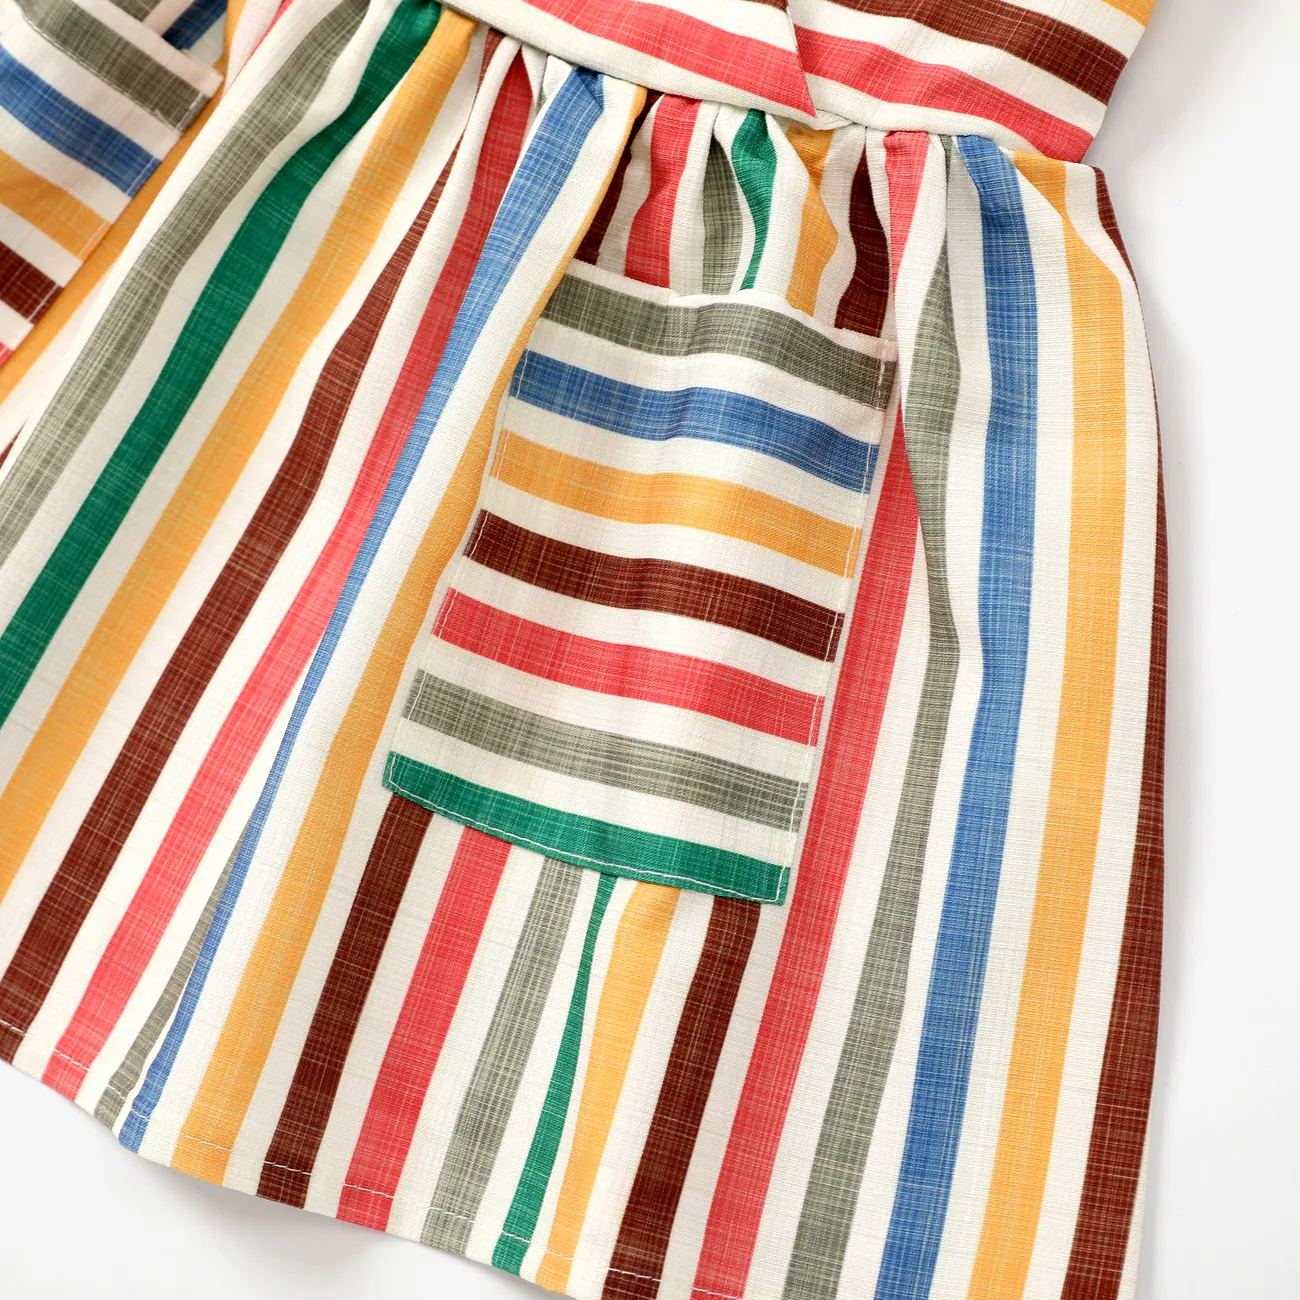 Baby Girl 2pcs Bohemia Stripe Print Cami Dress with Headband Multicolour-1 big image 1